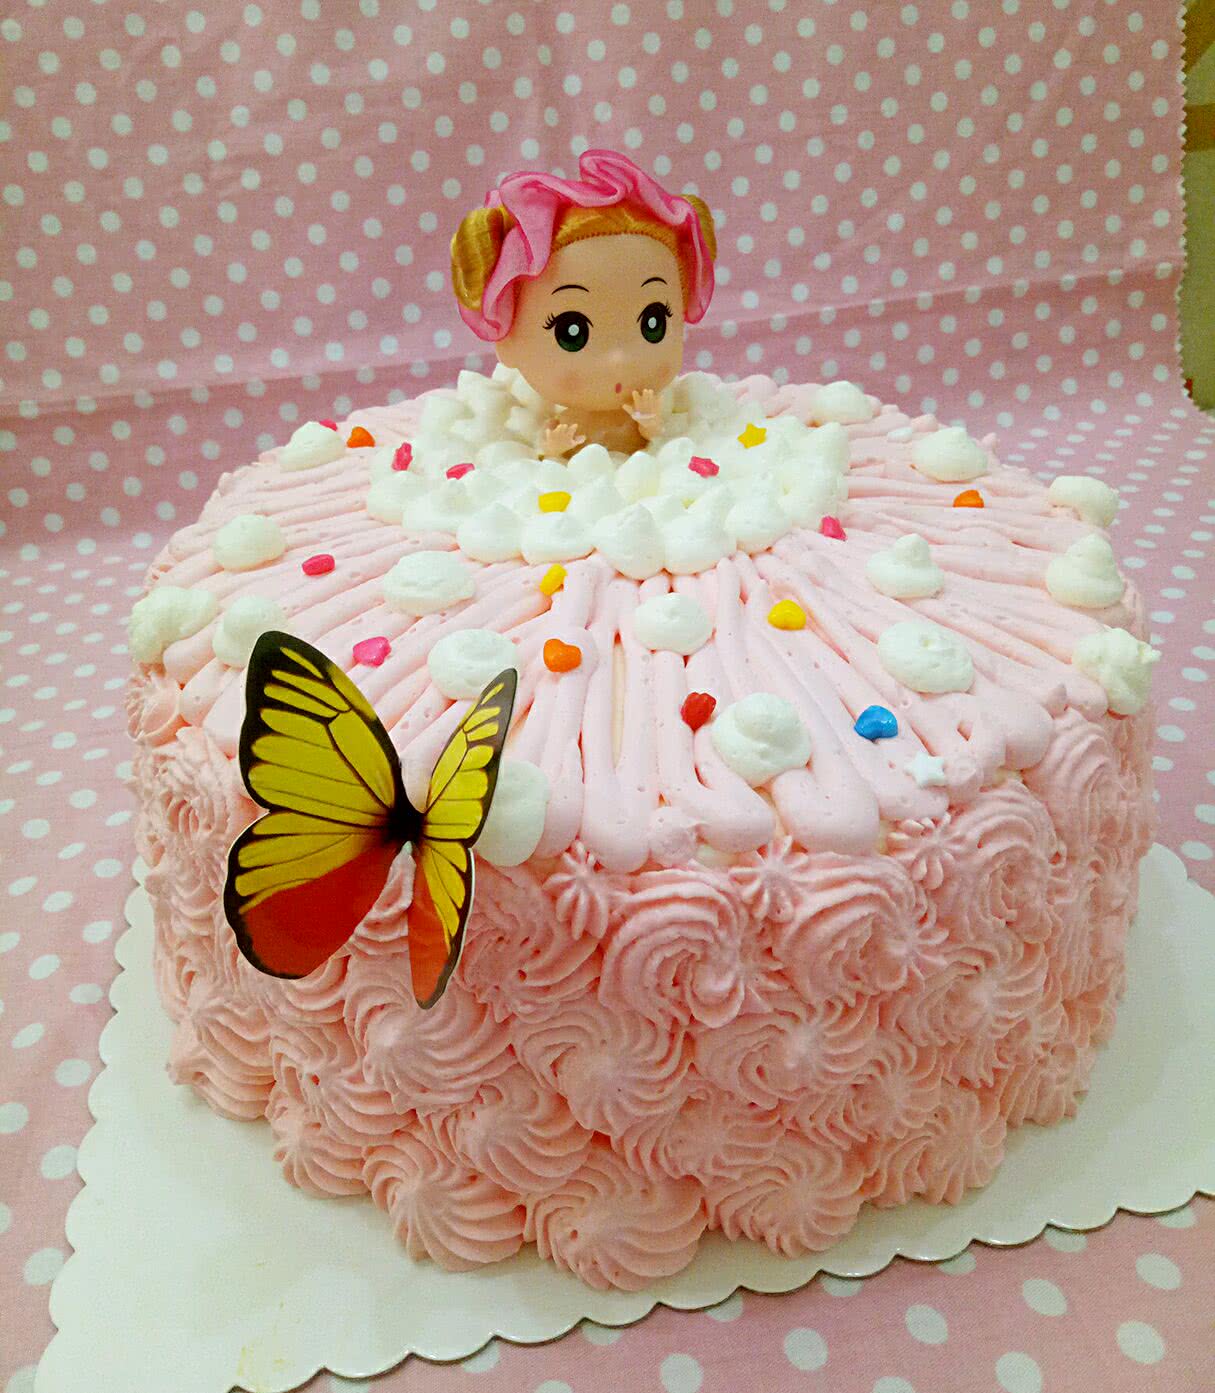 Pink Barbie Doll Cake 粉红芭比娃娃蛋糕 - Cube Bakery & Cafe